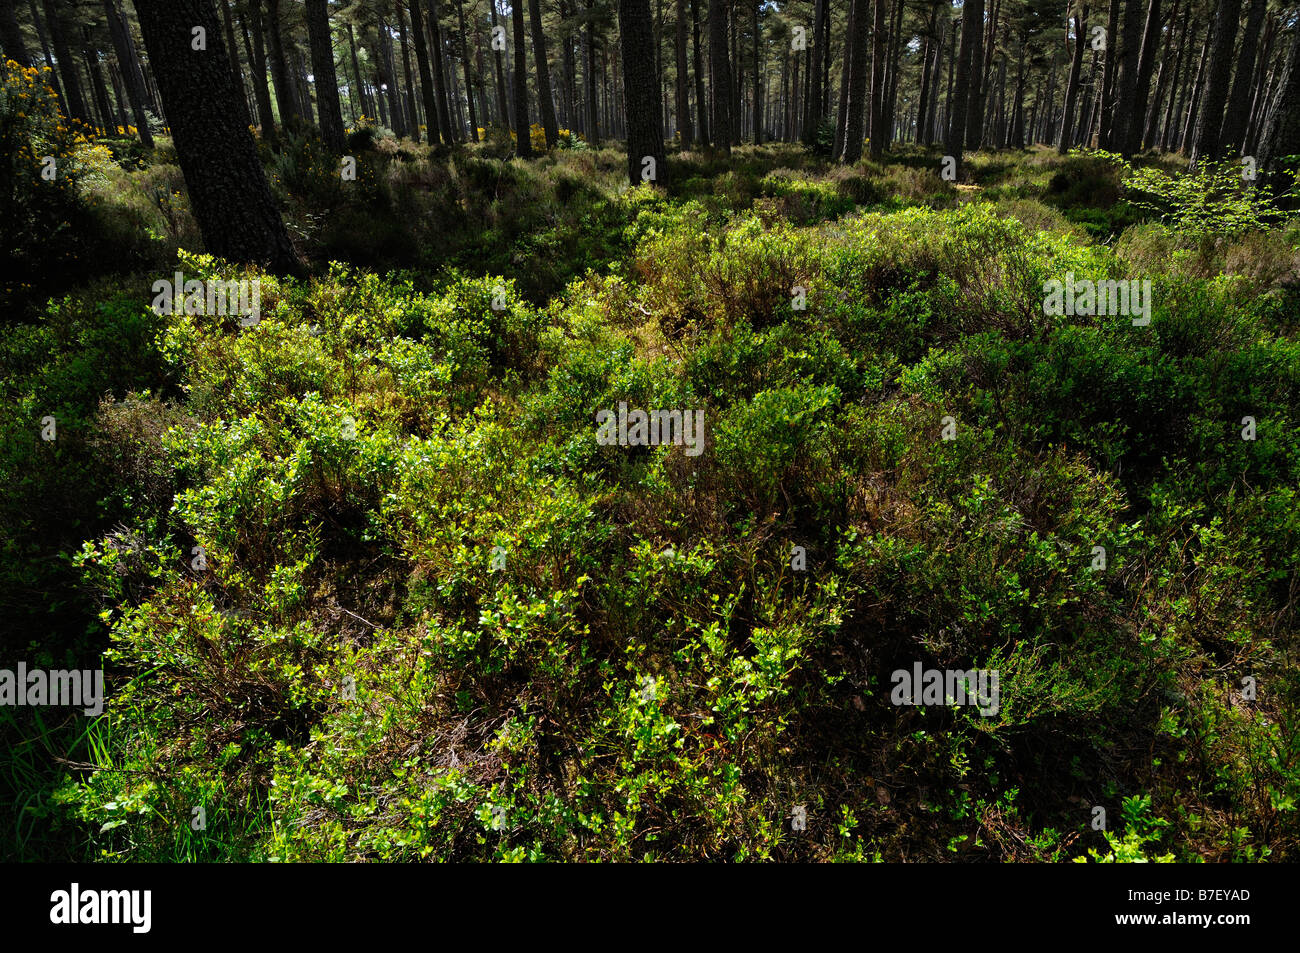 Undergrowth of blueberry bushes in conifer woodlands at Balblair Woods Golspie Sutherland Scotland UK Stock Photo